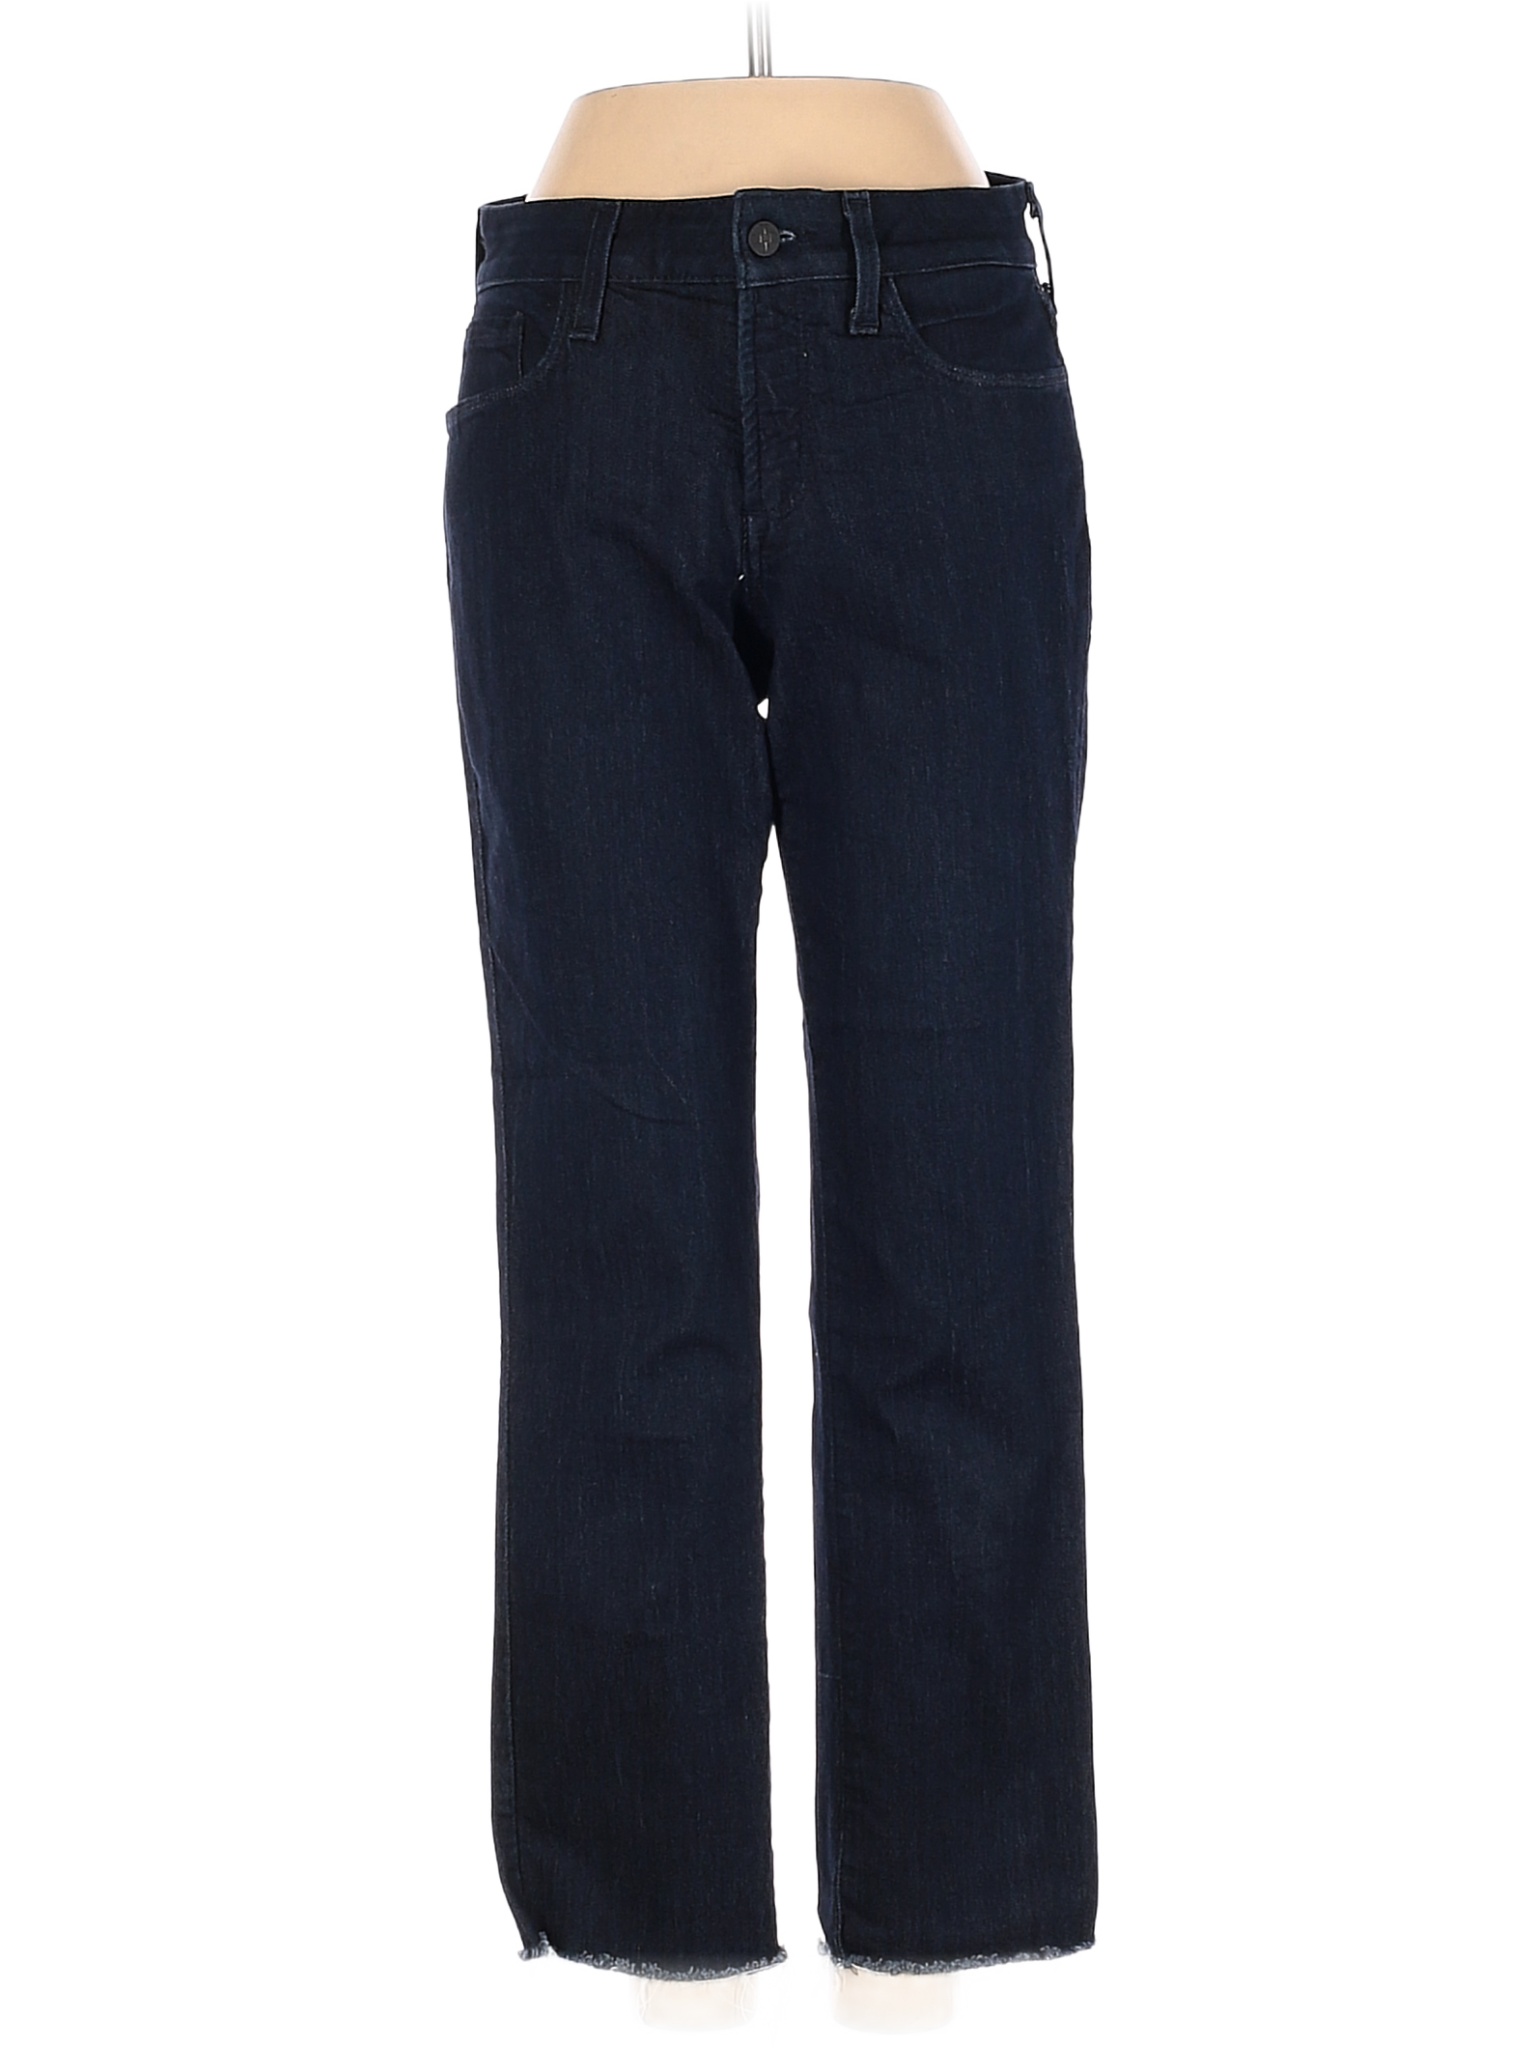 NYDJ Solid Blue Jeans Size 0 - 83% off | thredUP